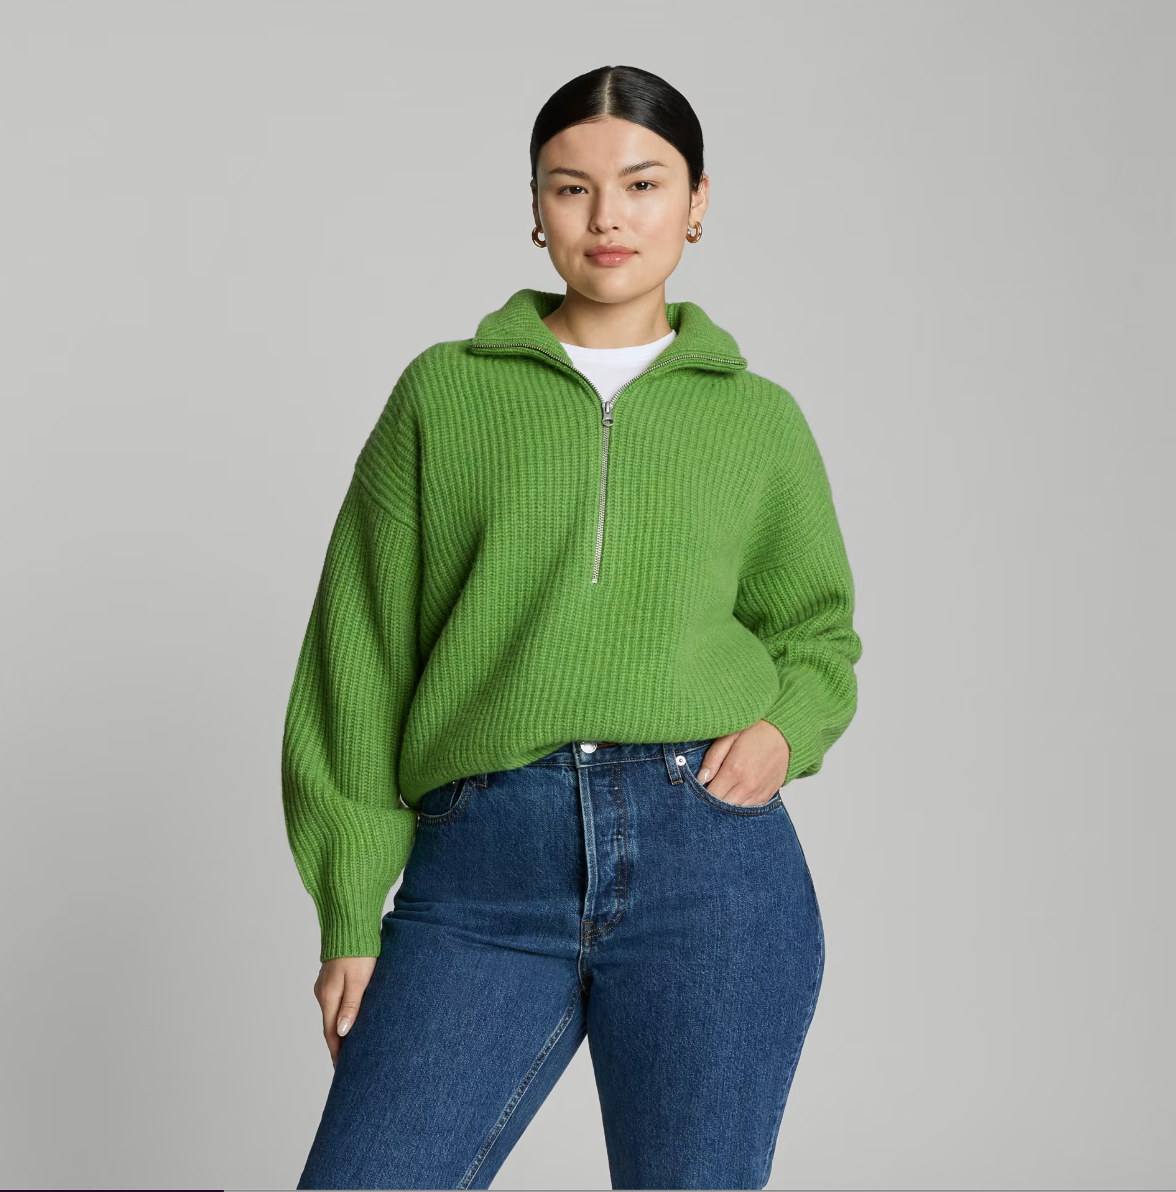 green sweater on model